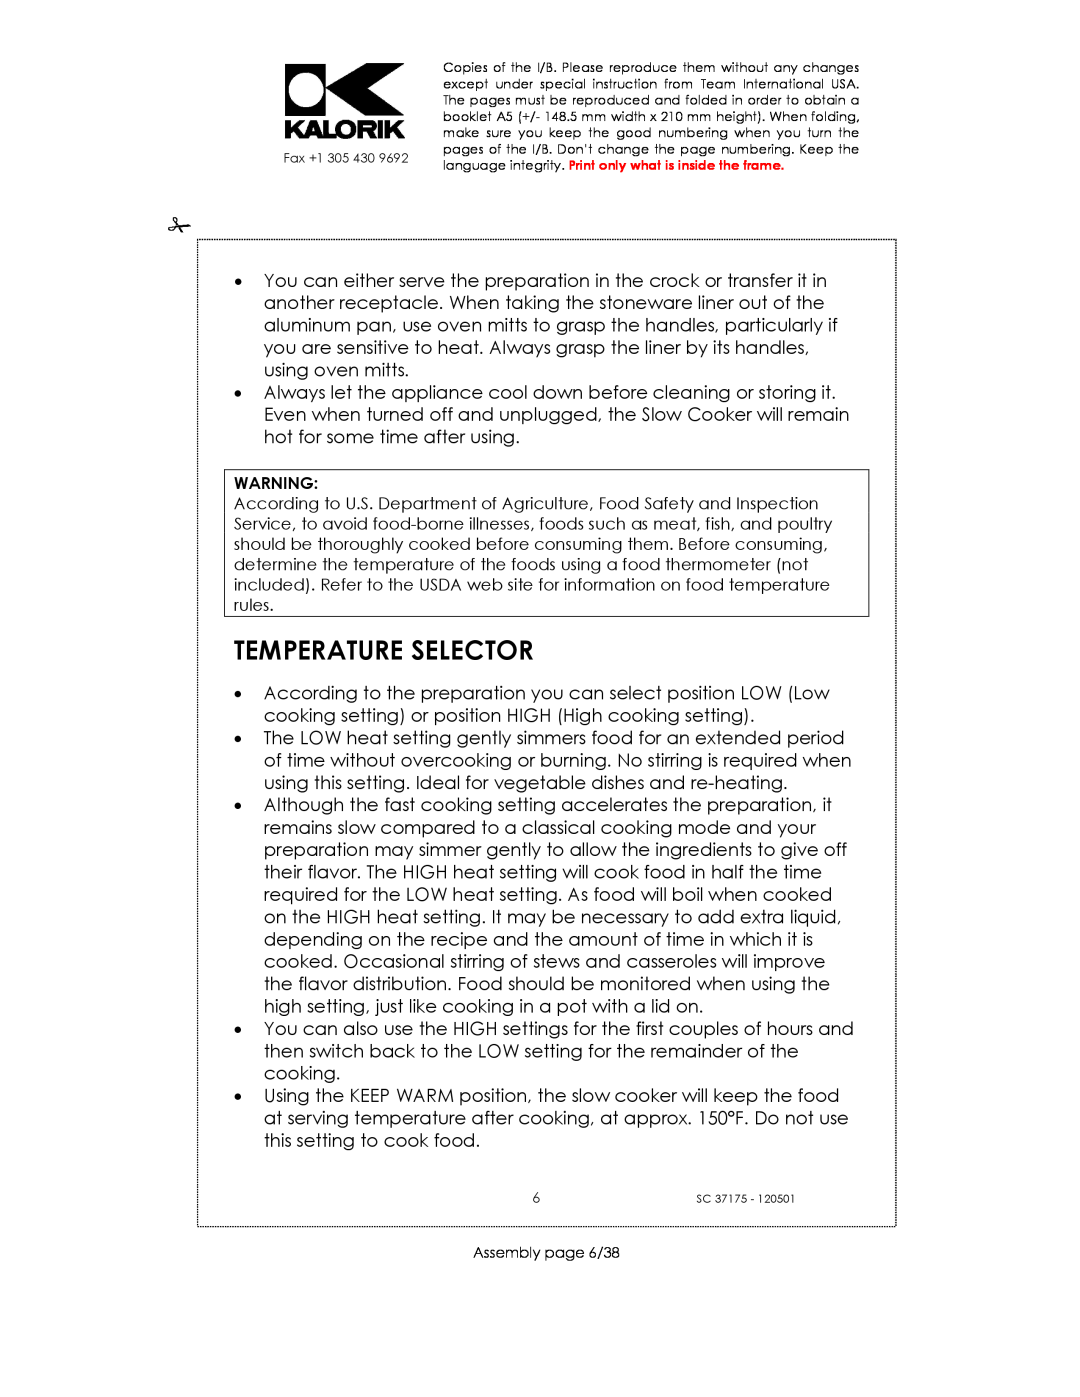 Kalorik SC 37175 manual Temperature Selector, Assembly page 6/38 